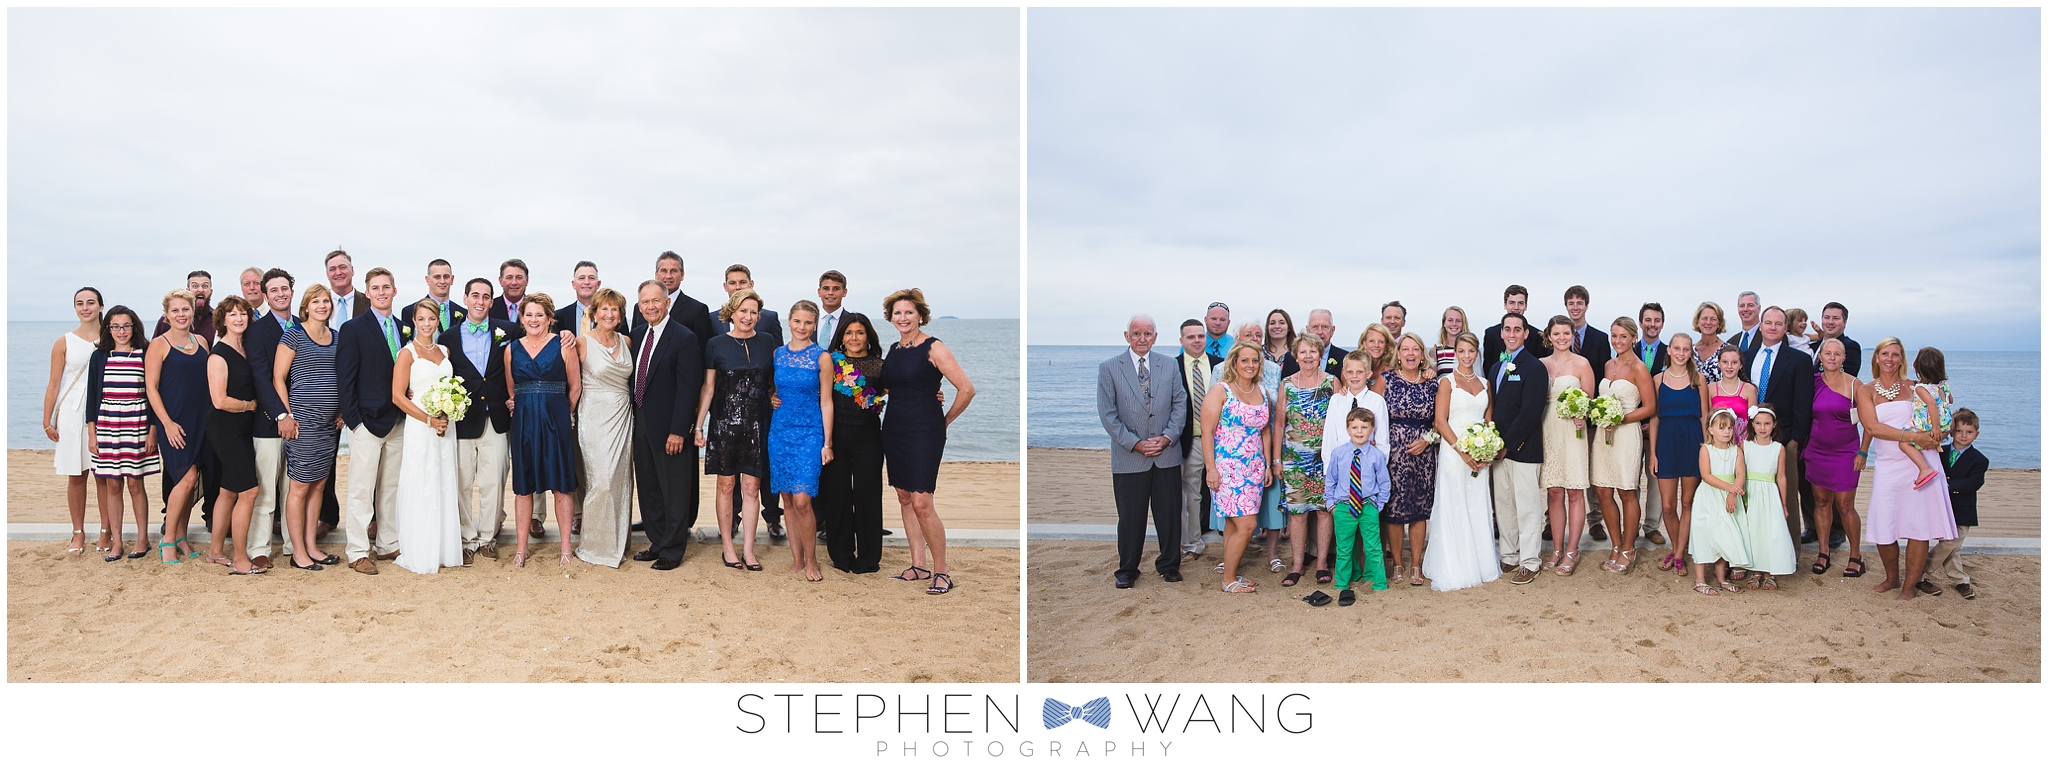 Stephen Wang Photography Madison Surf Club Wedding Photogrpahy CT Connecticut Shoreline Beach Summer Sunset -08-12_0017.jpg